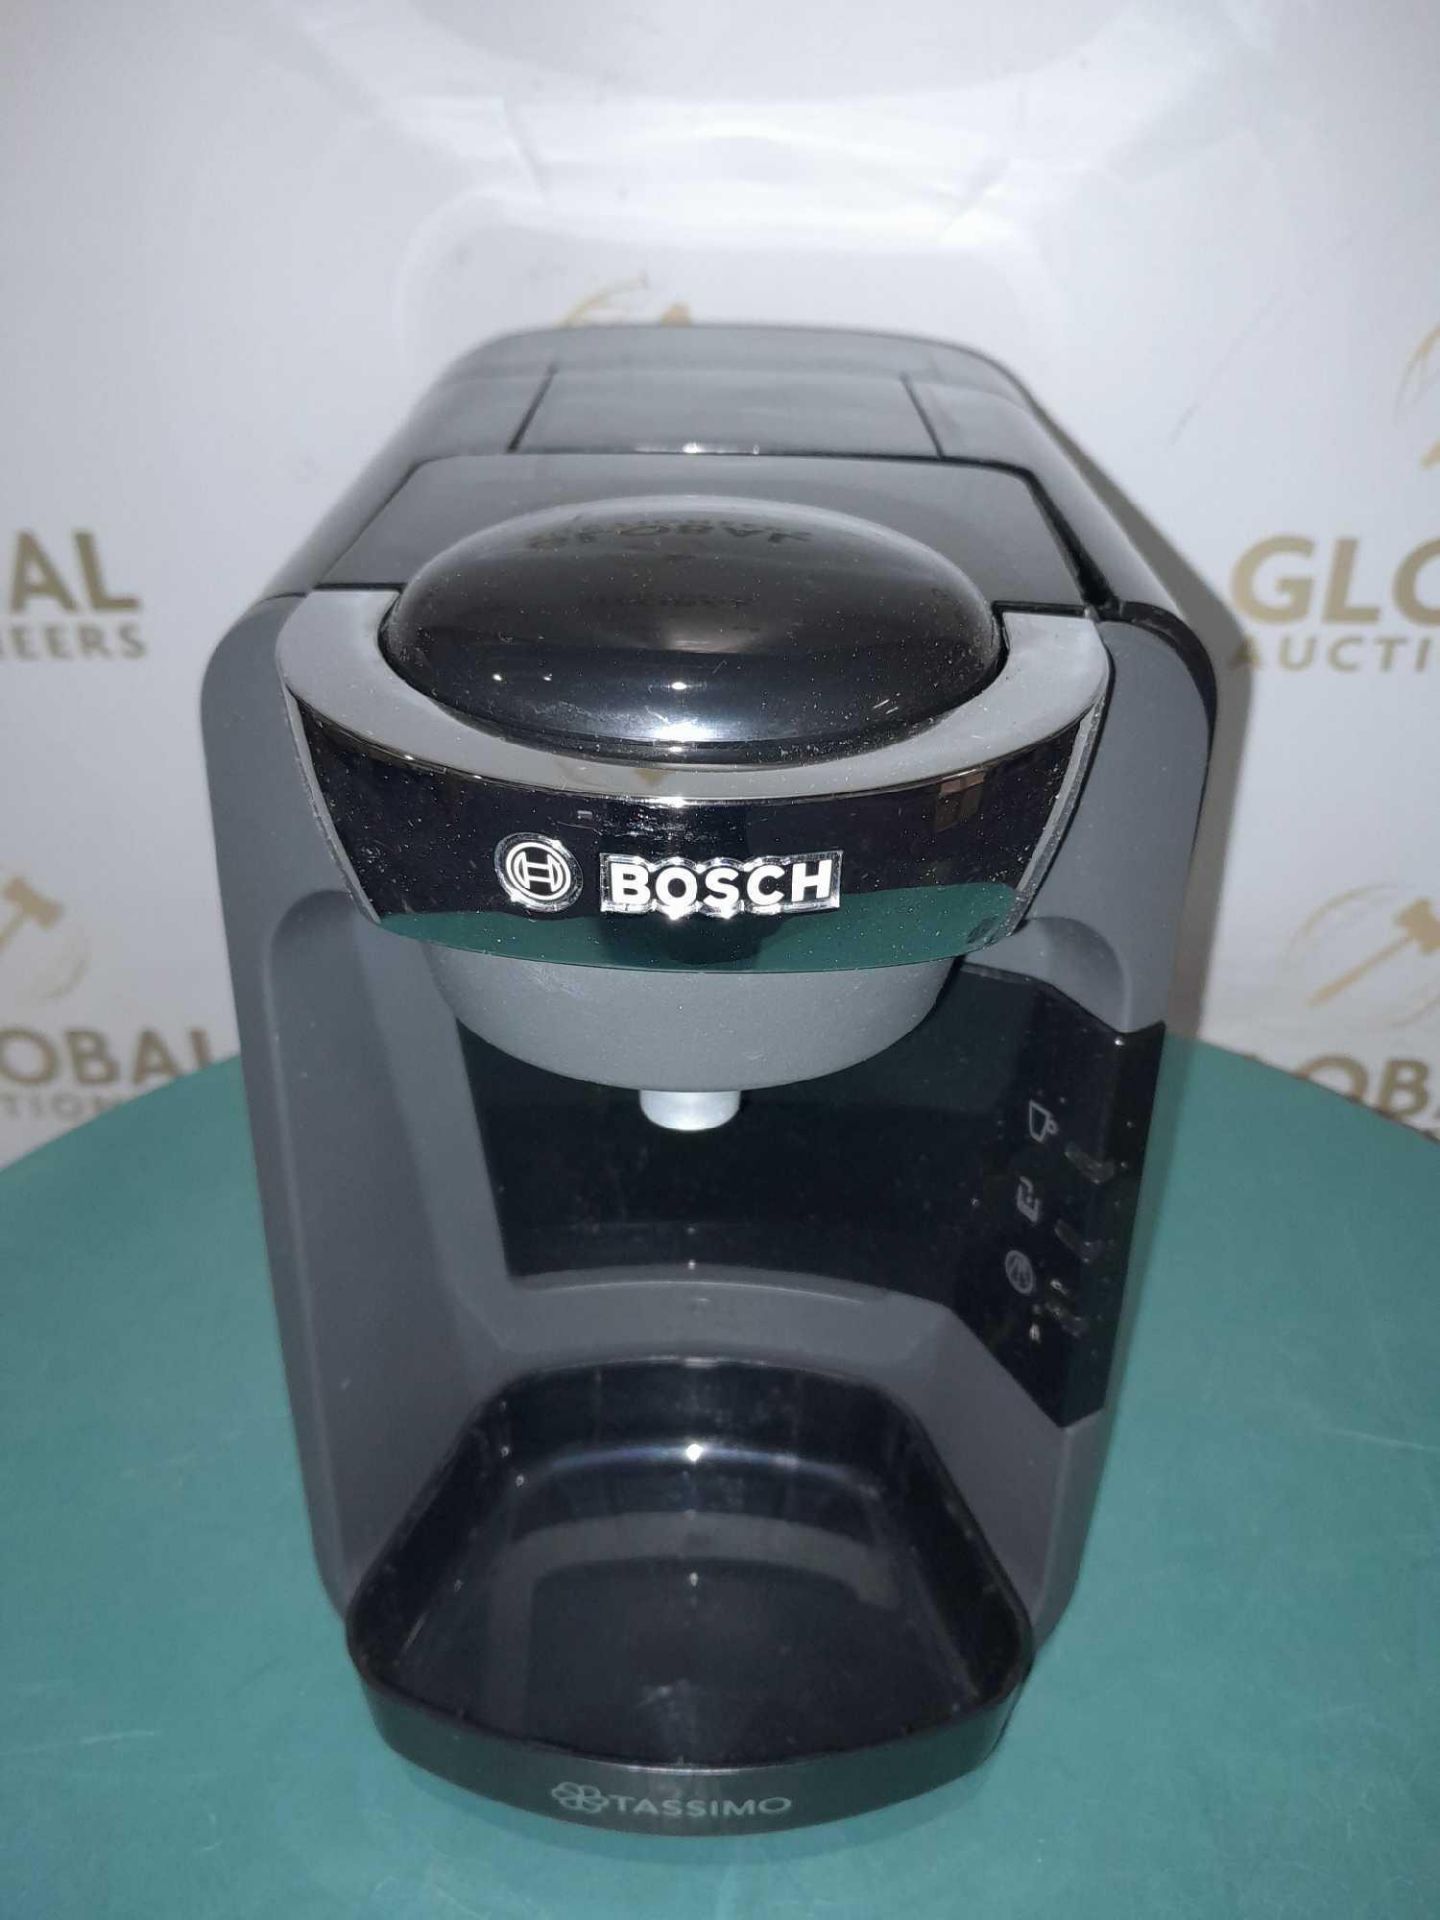 RRP £150 Boxed Bosch Tas3202Gb Sunny Tassimo Coffee Machine - Image 2 of 2